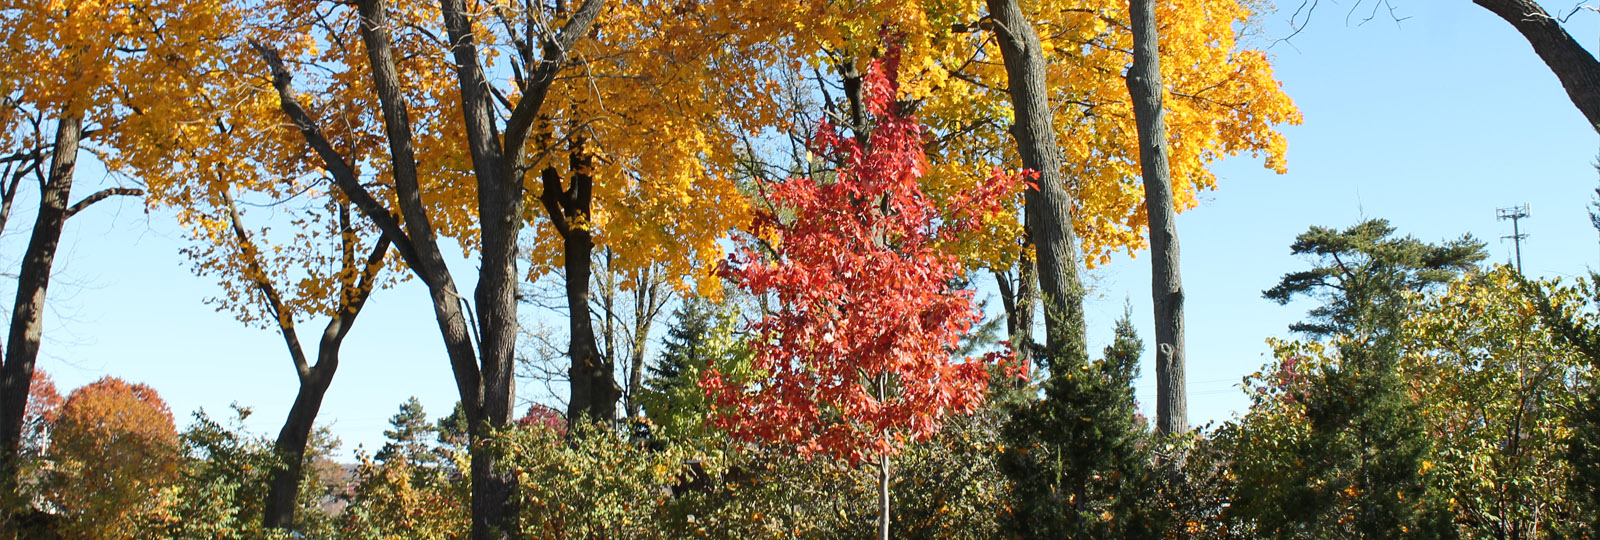 kayhart arboretum fall foliage